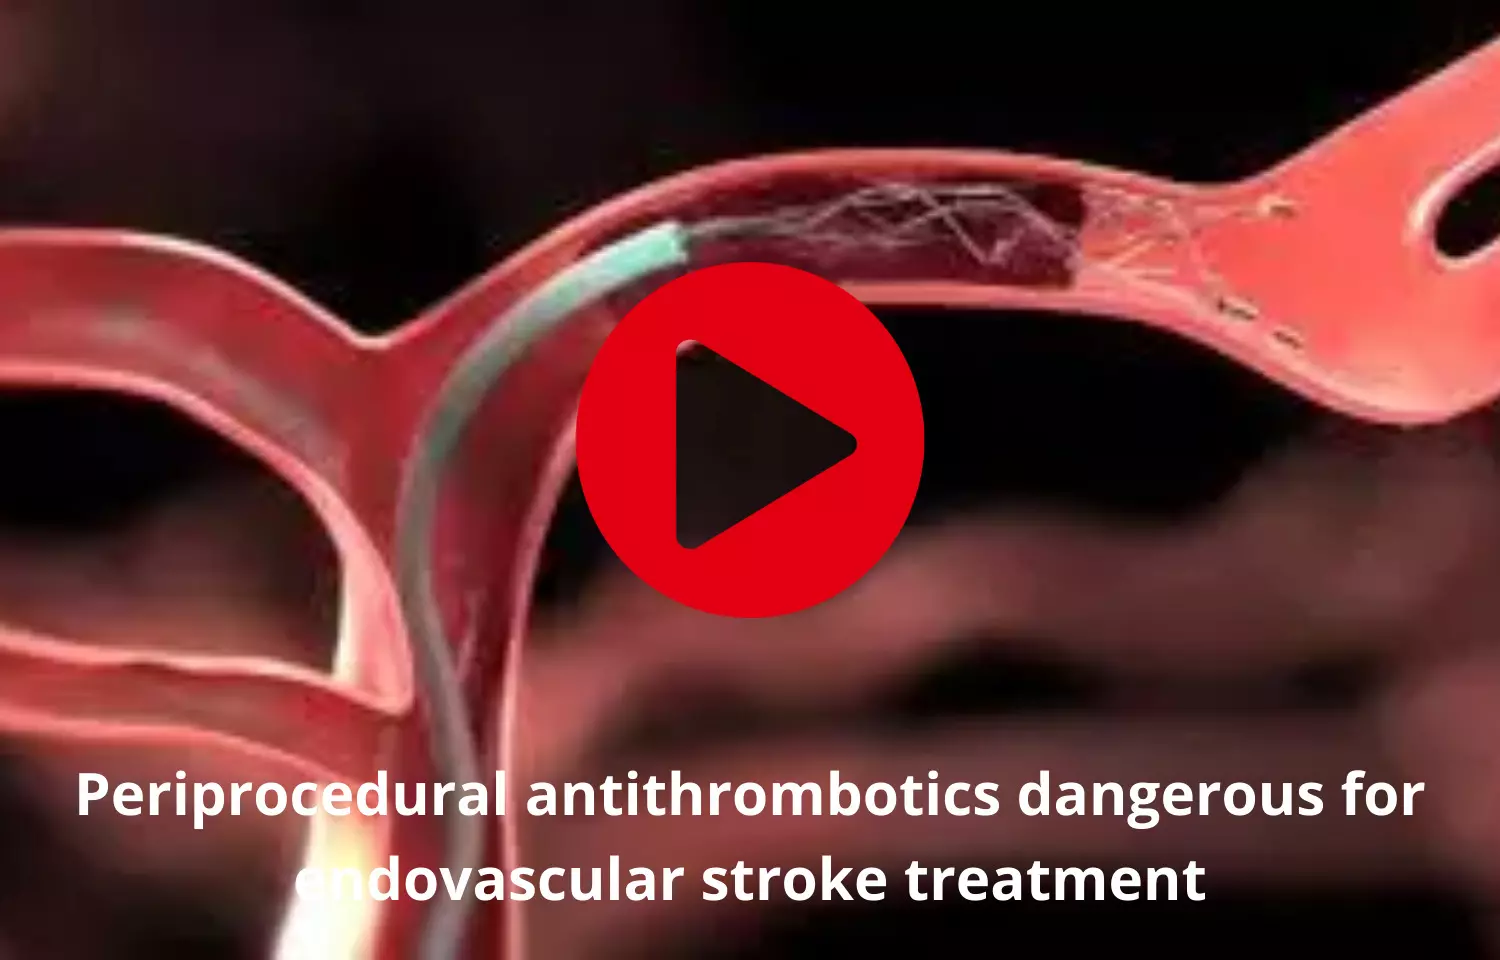 Periprocedural antithrombotics dangerous for endovascular stroke treatment